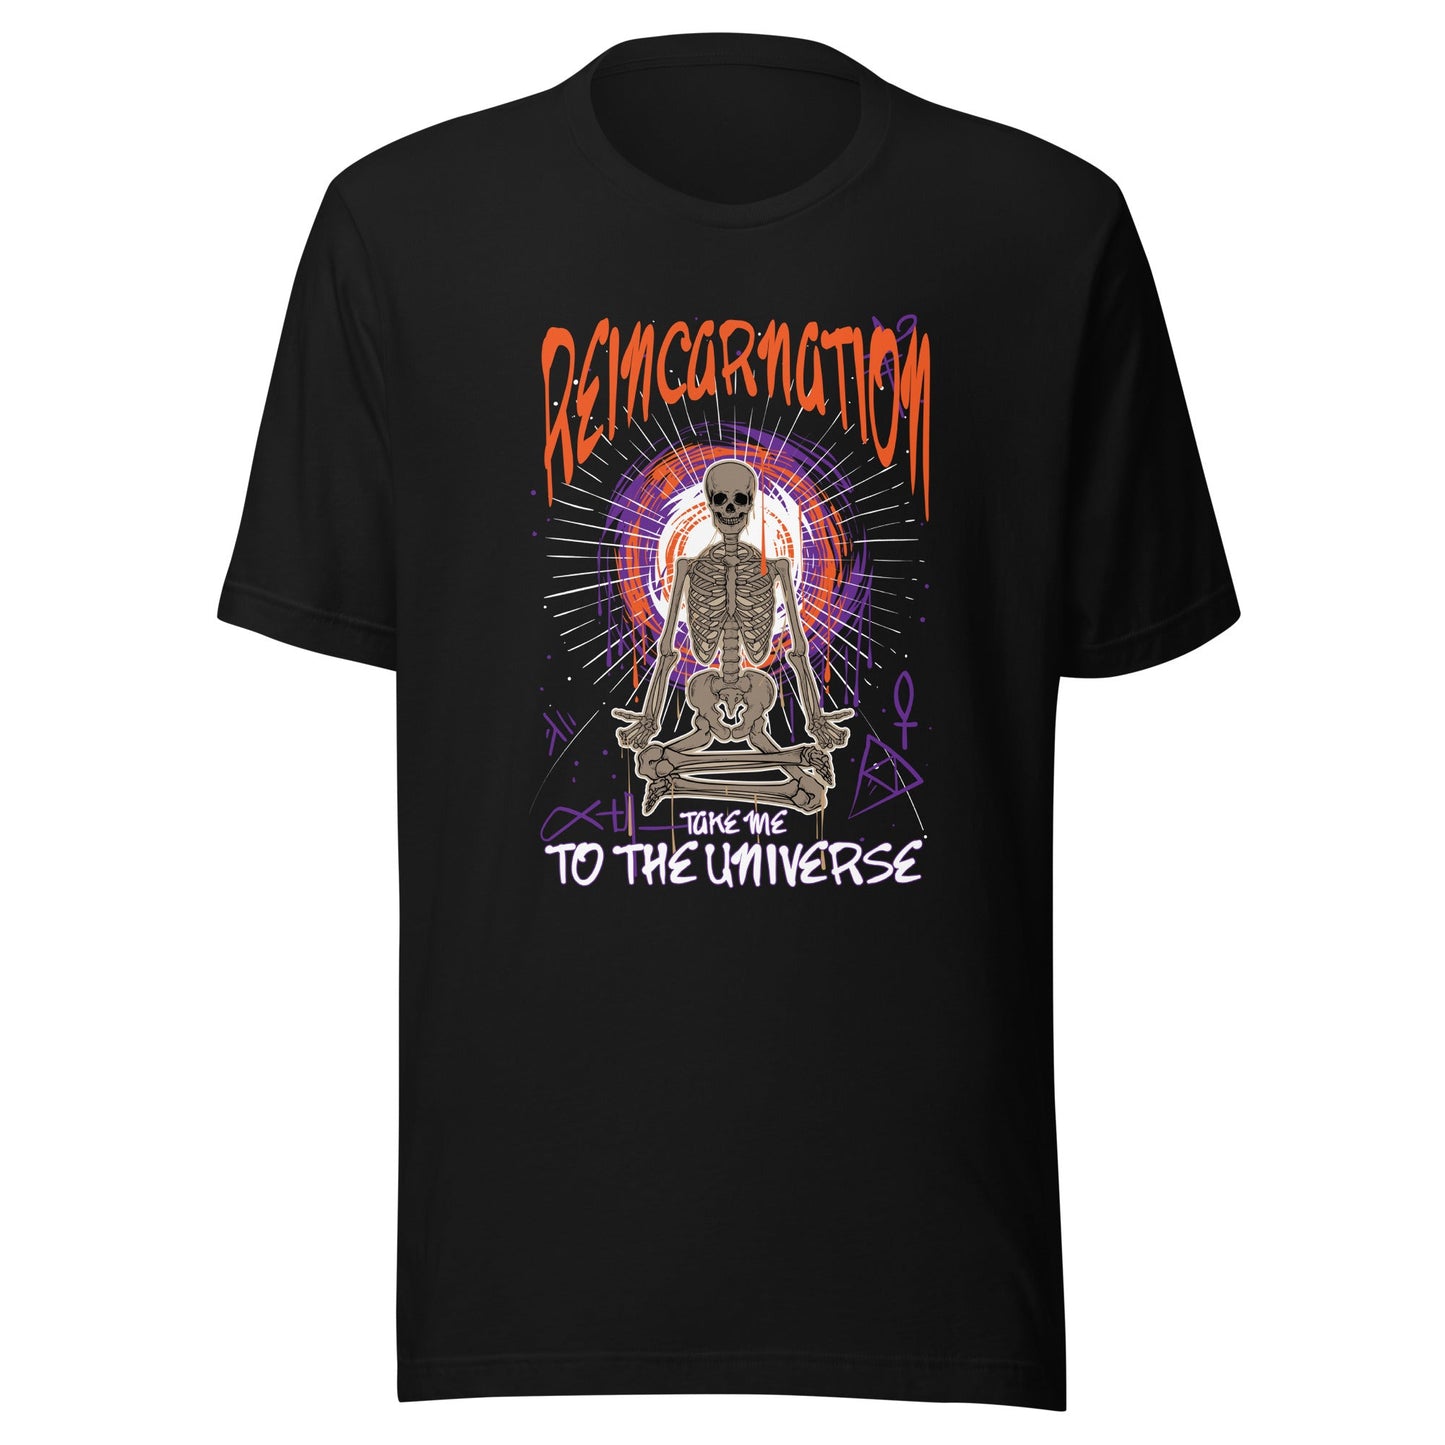 Reincarnation Unisex T-Shirt - Spiritual Symbol Tee for All